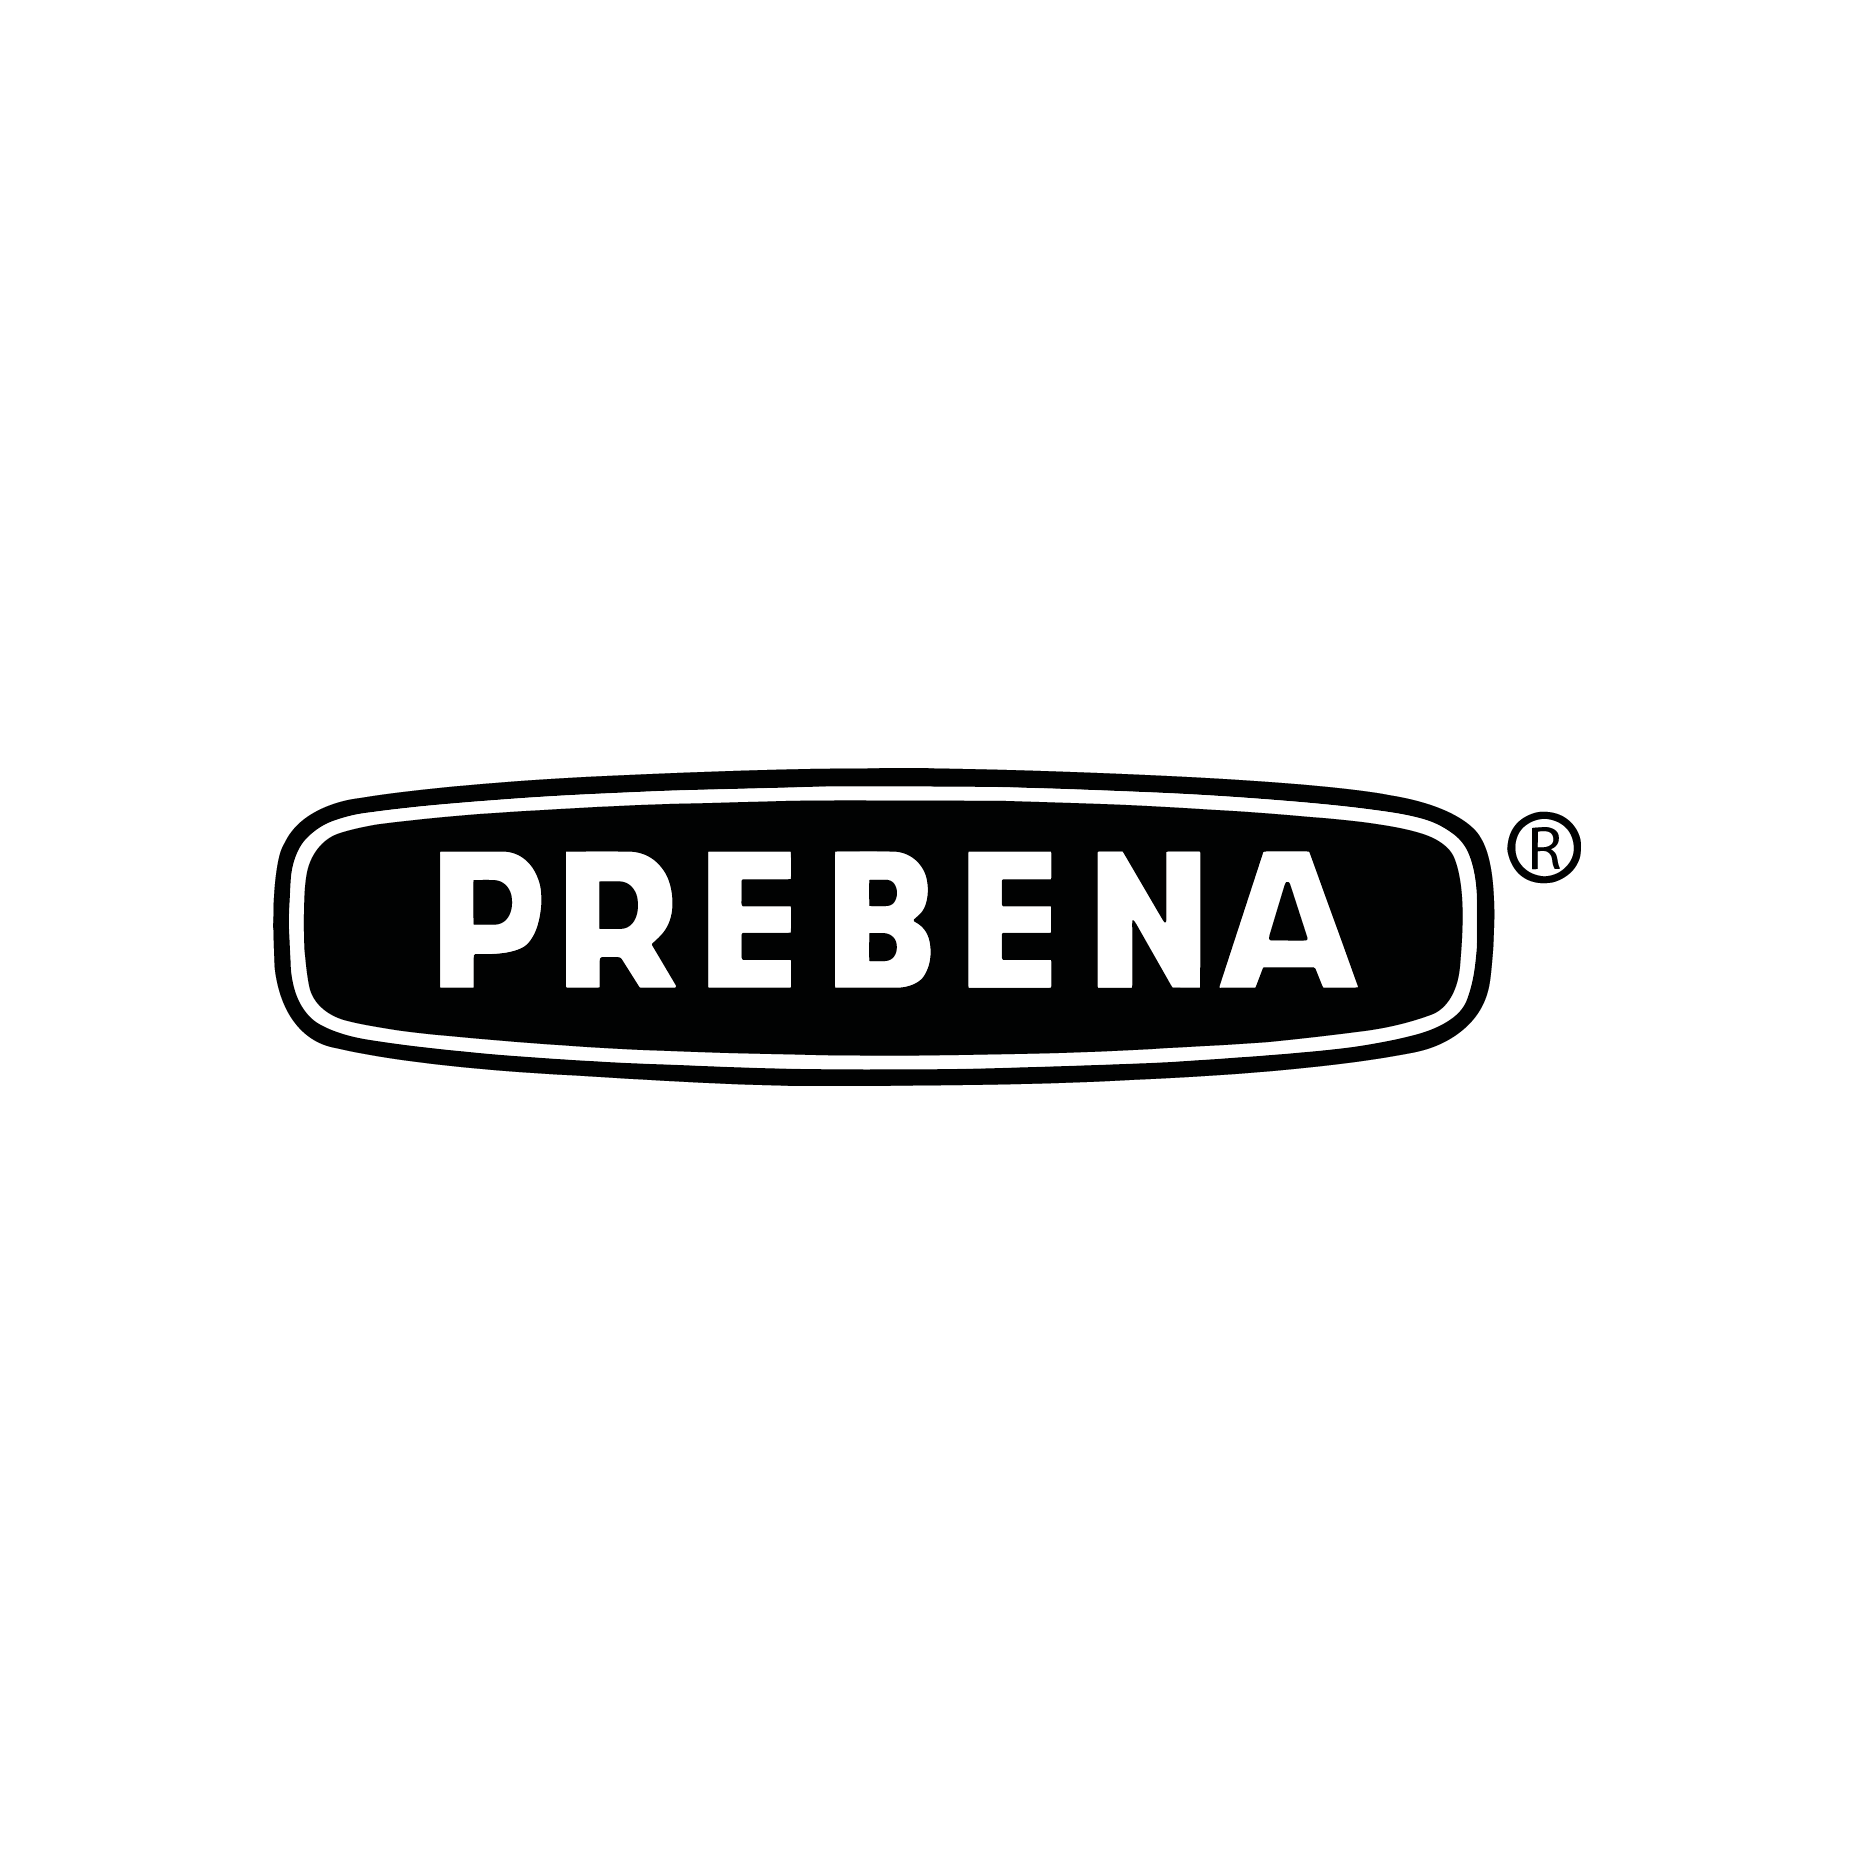 Prebena Logo